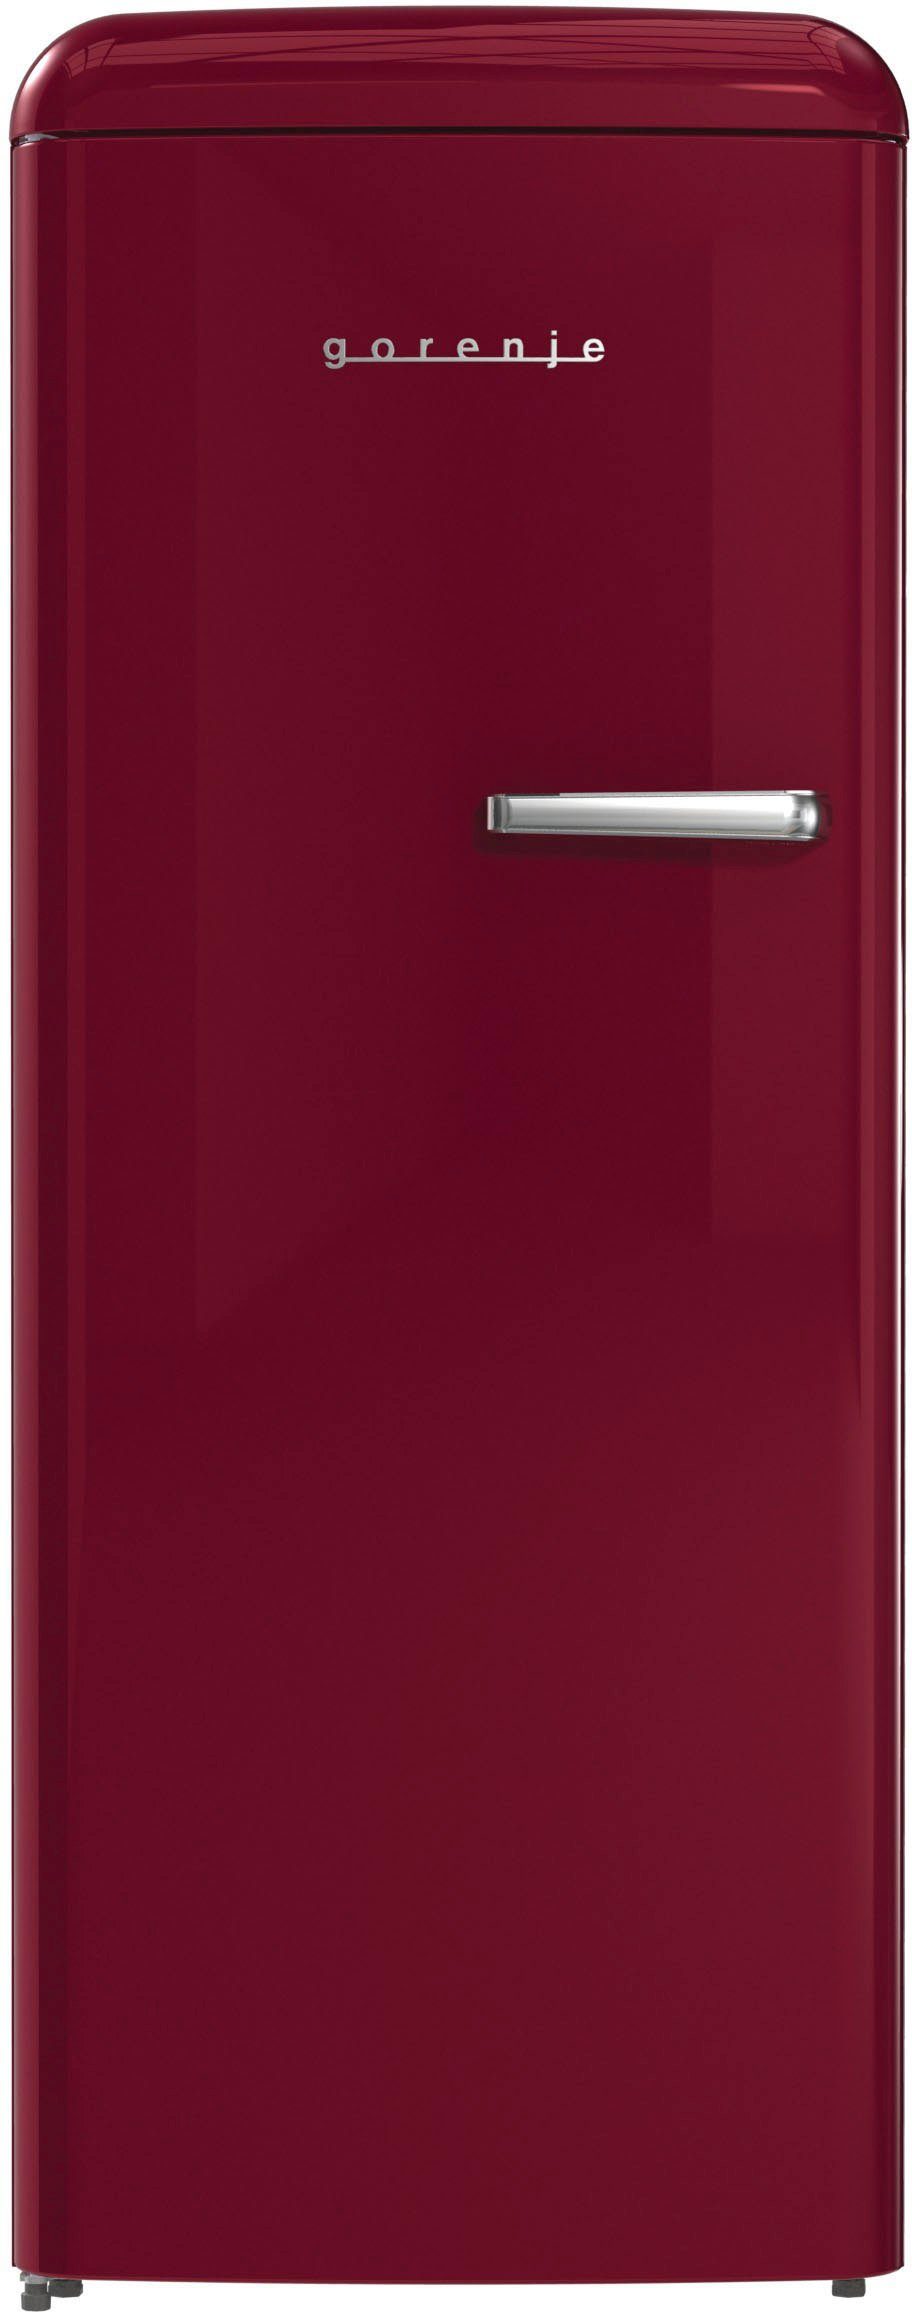 GORENJE Kühlschrank ORB615DR-L, 152,5 cm hoch, 59,5 cm breit